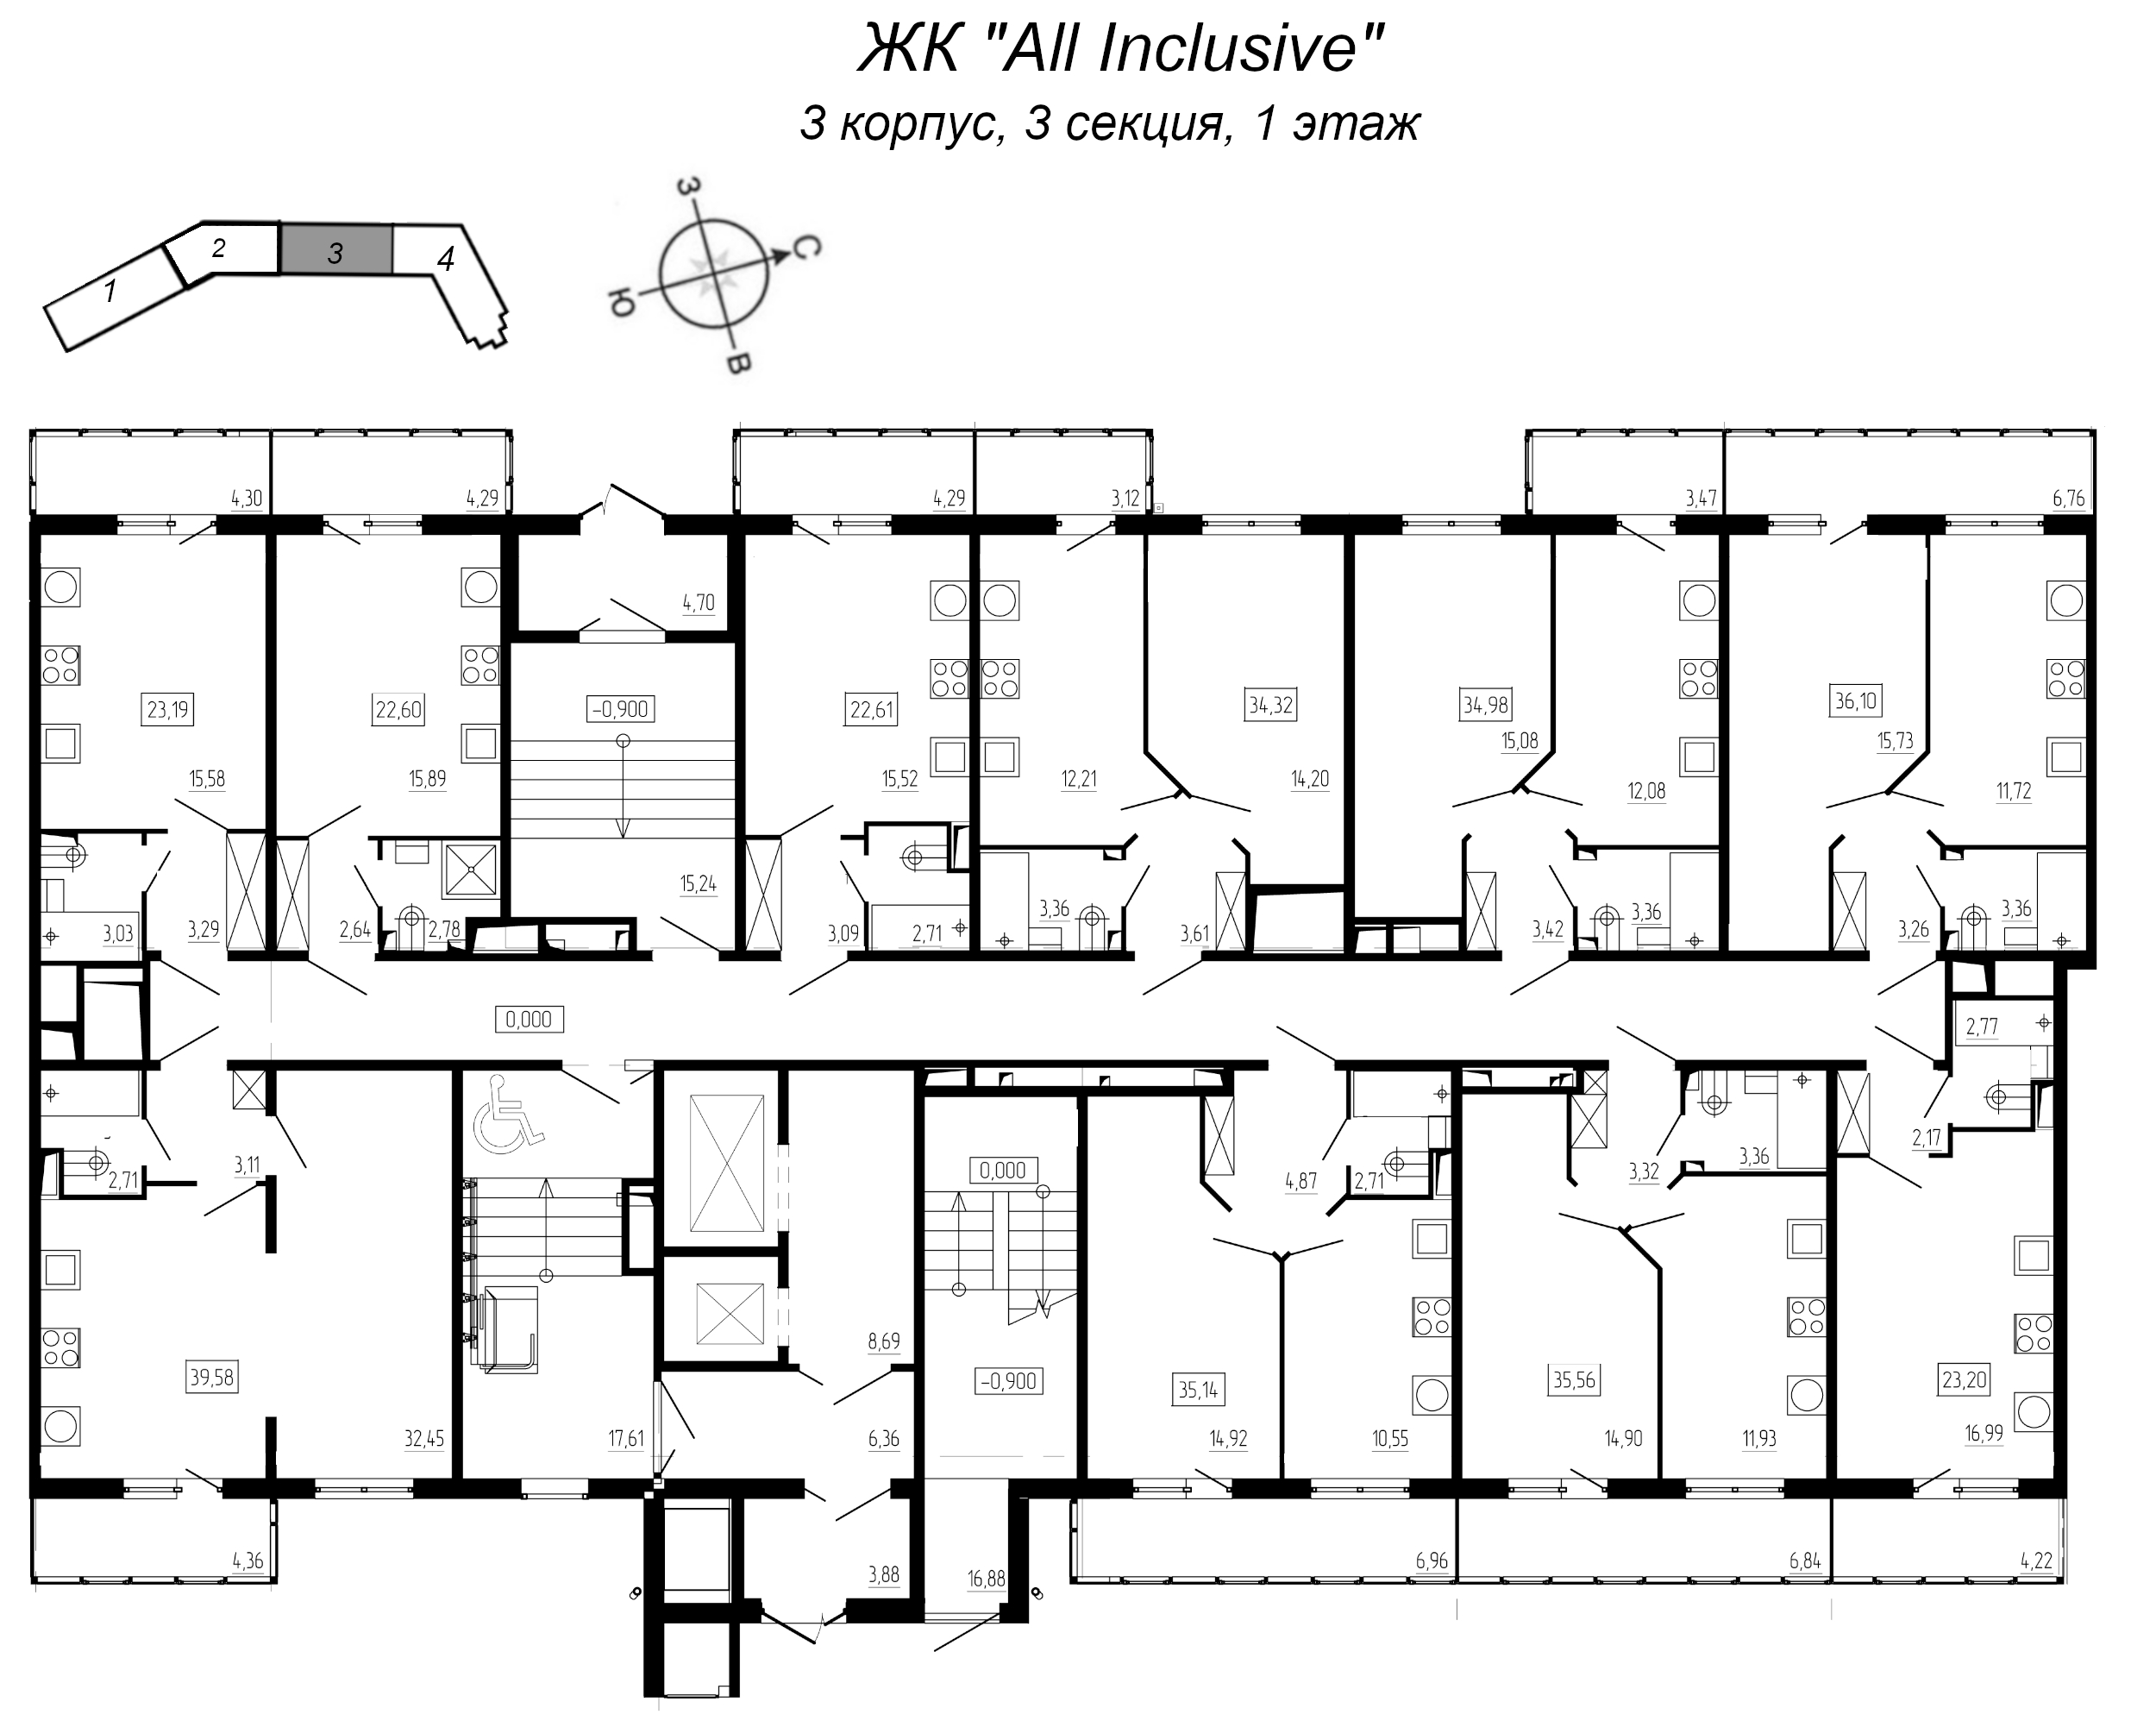 Квартира-студия, 39.58 м² в ЖК "All Inclusive" - планировка этажа